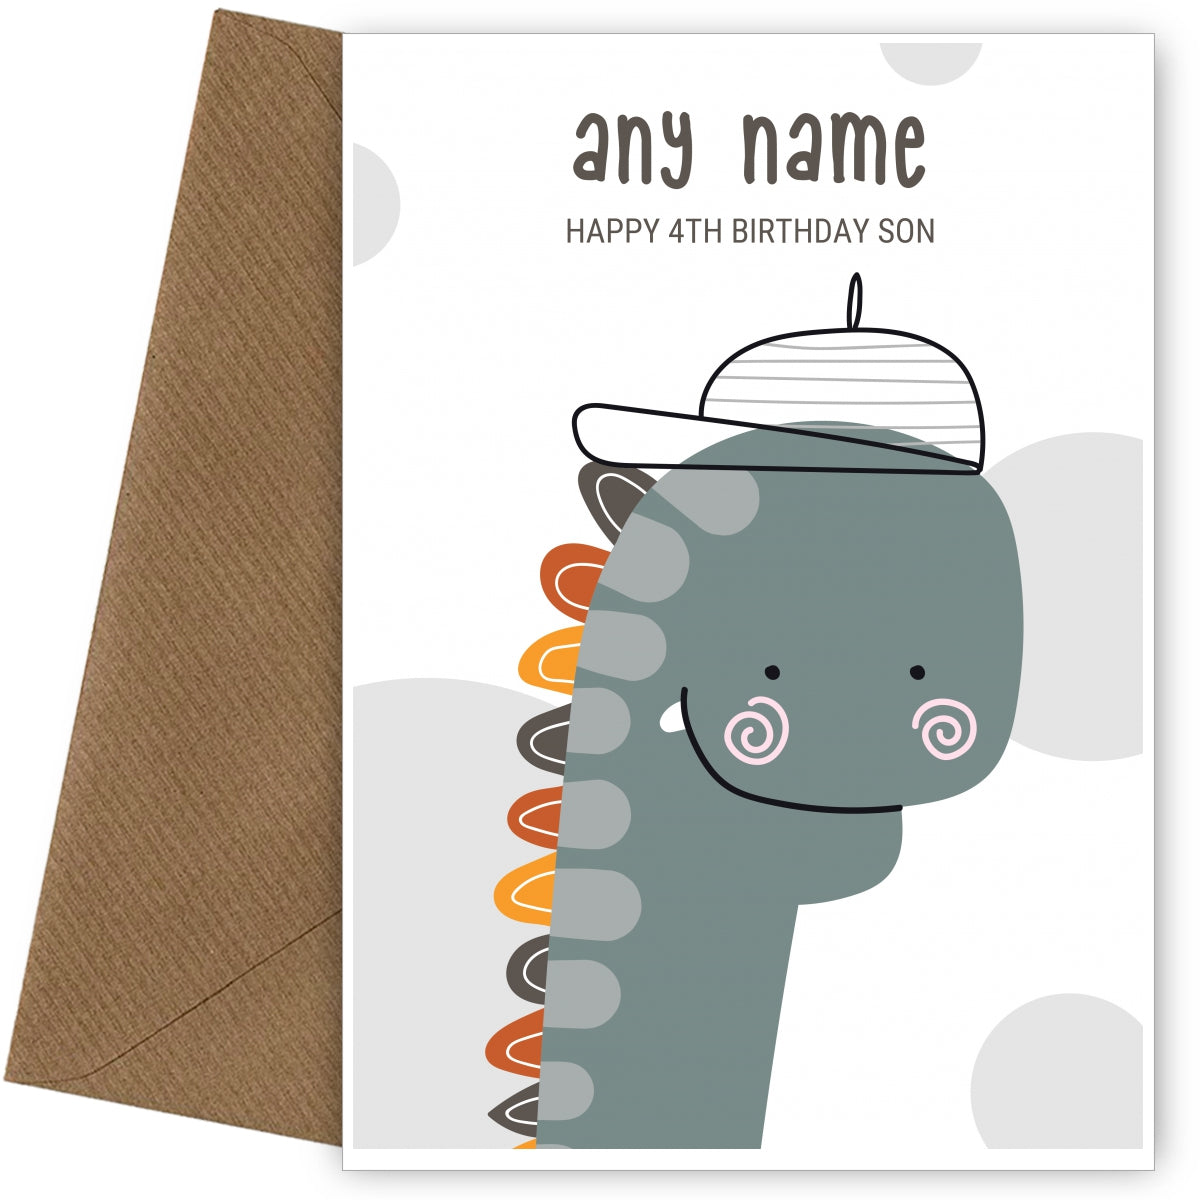 Happy 4th Birthday Card for Son - Dinosaur with Cap